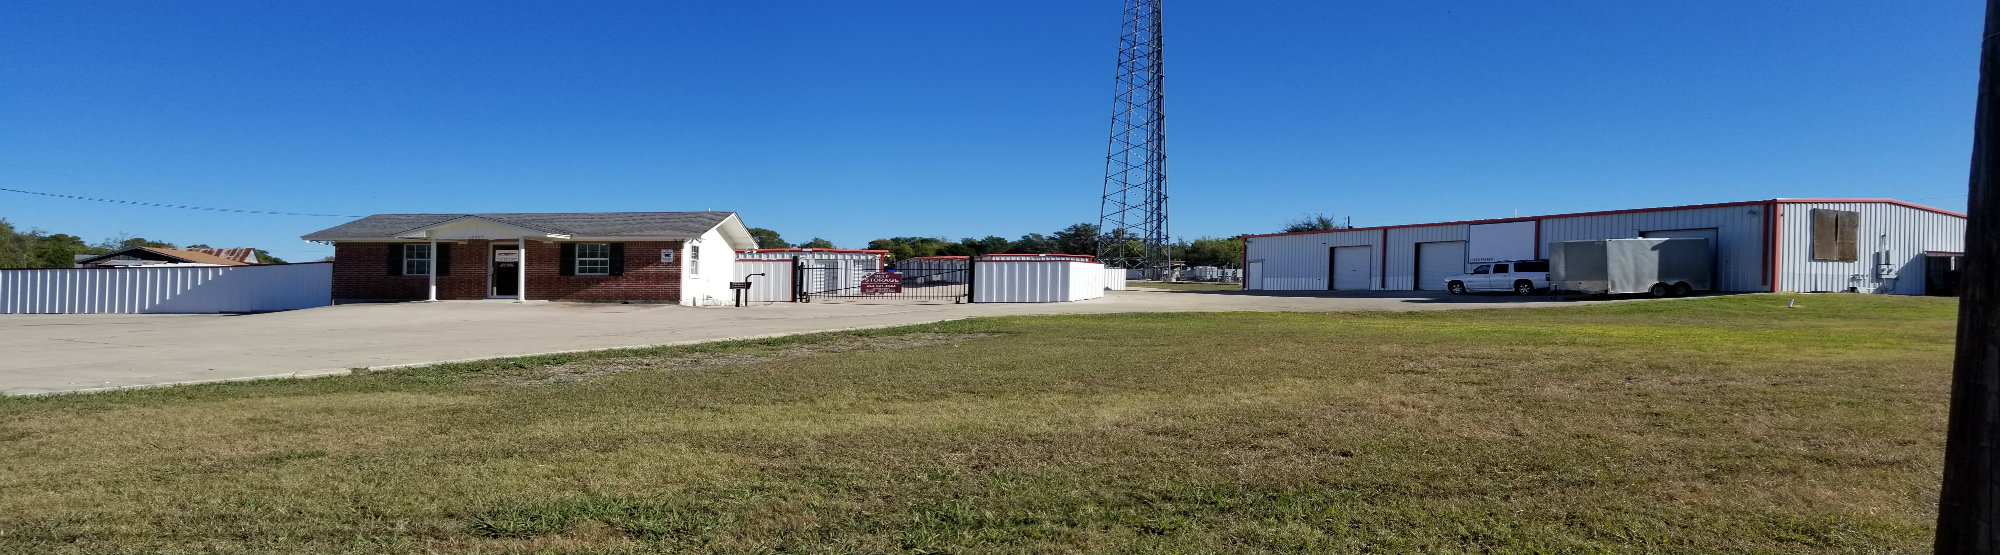 FM439 Self Storage in Killeen, TX